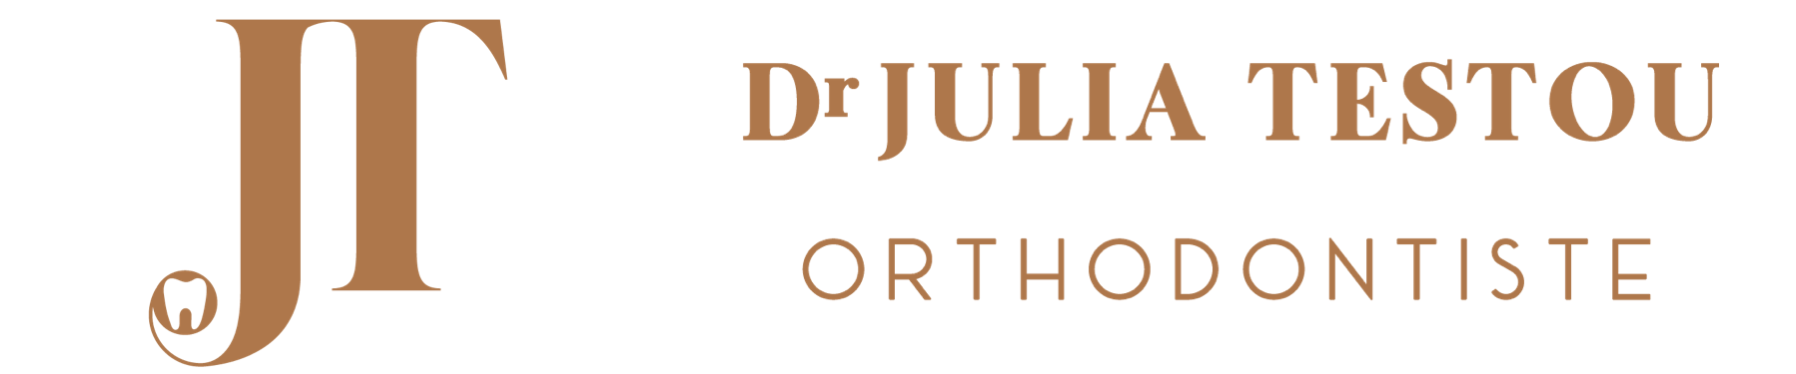 Docteur Julia Testou Orthodontie Avignon